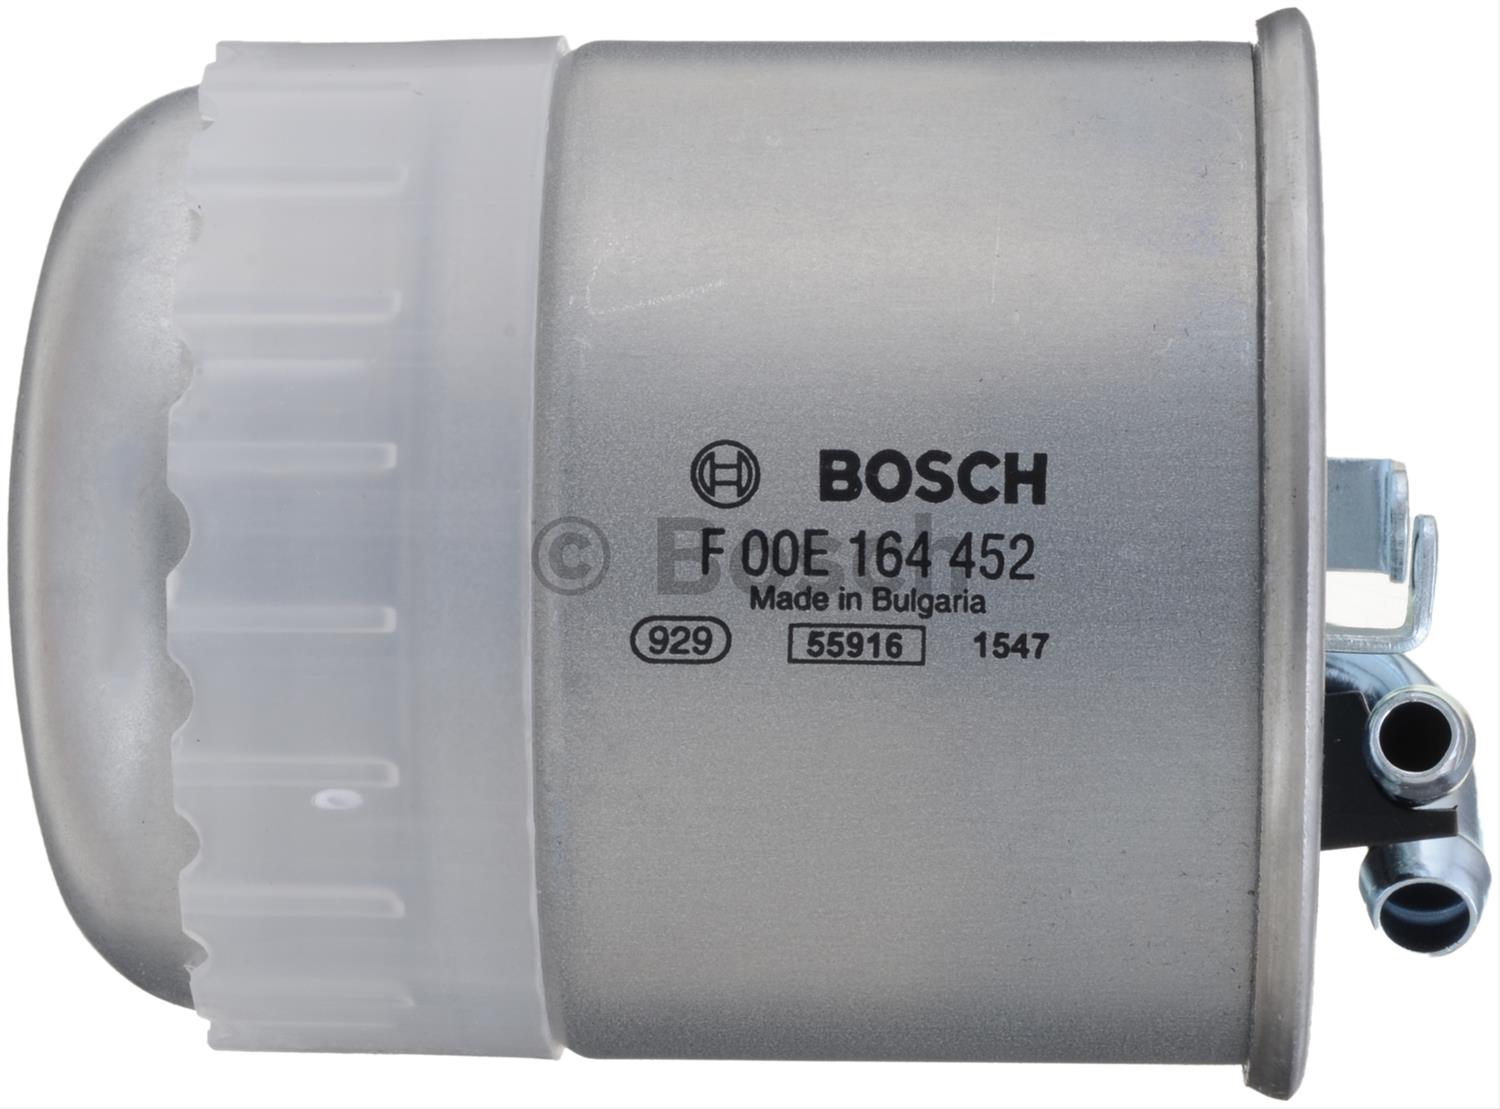 Bosch Automotive 78006ws